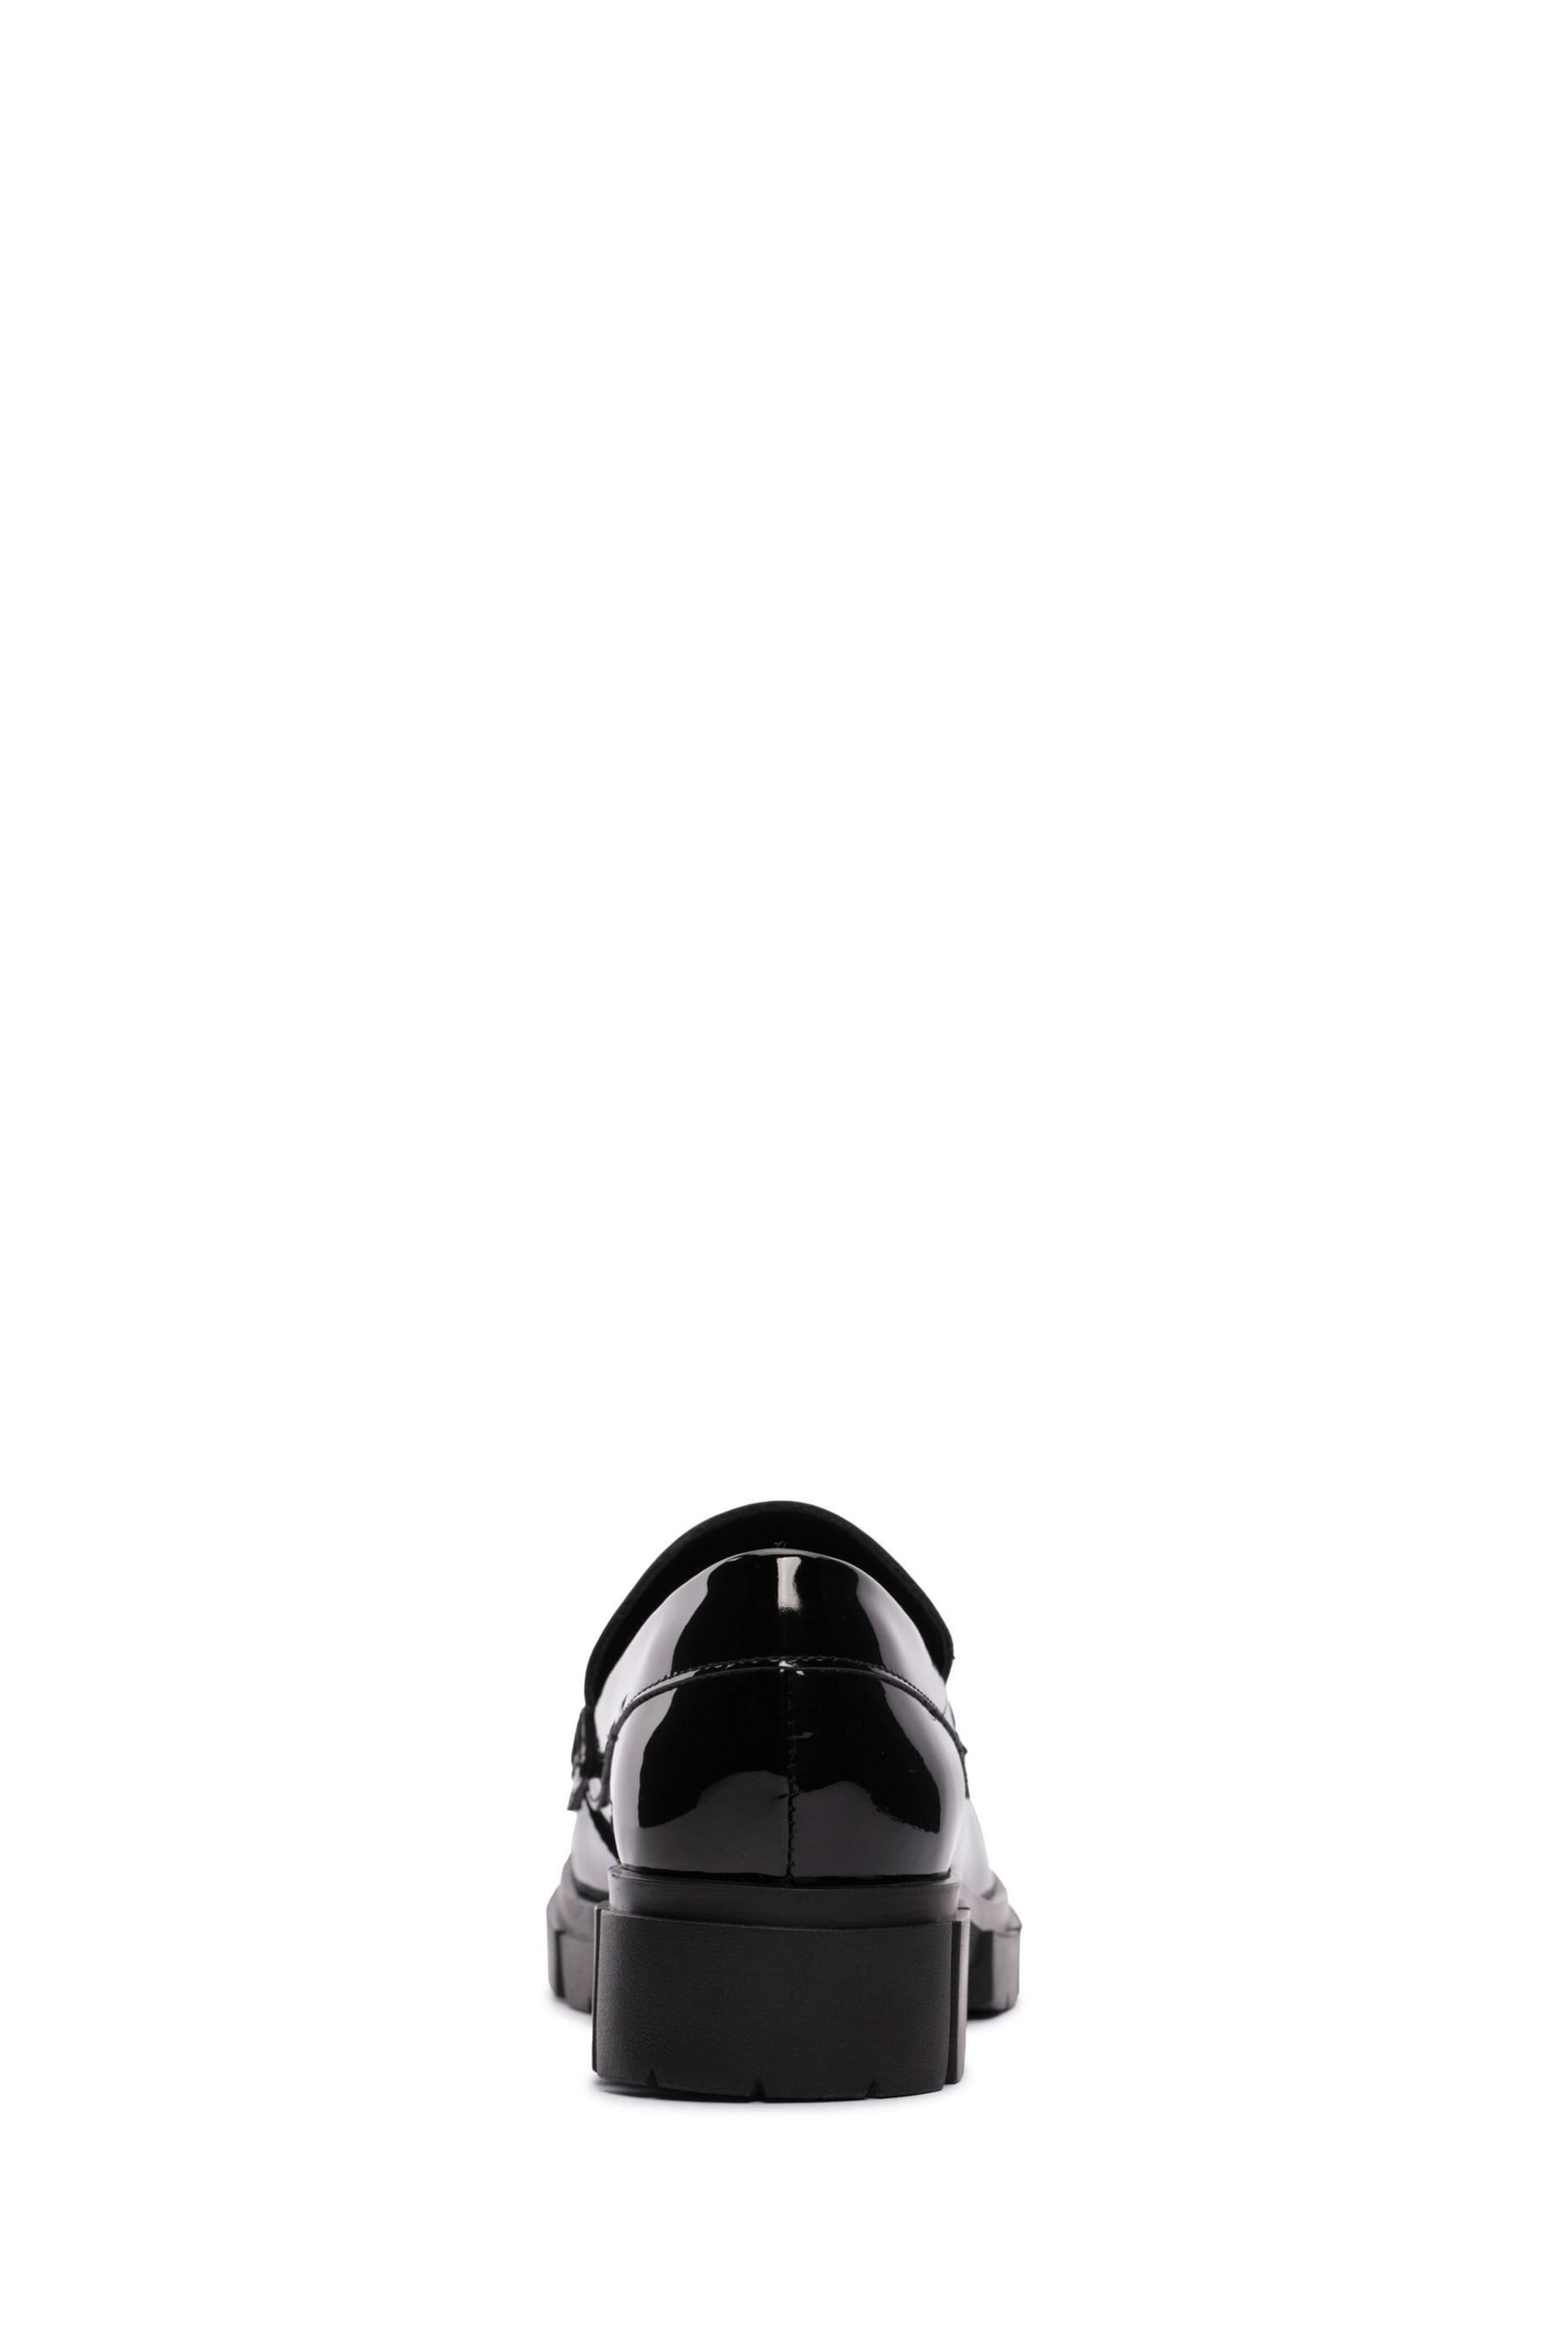 Clarks Black Patent Teala Loafer Shoes - Image 5 of 7